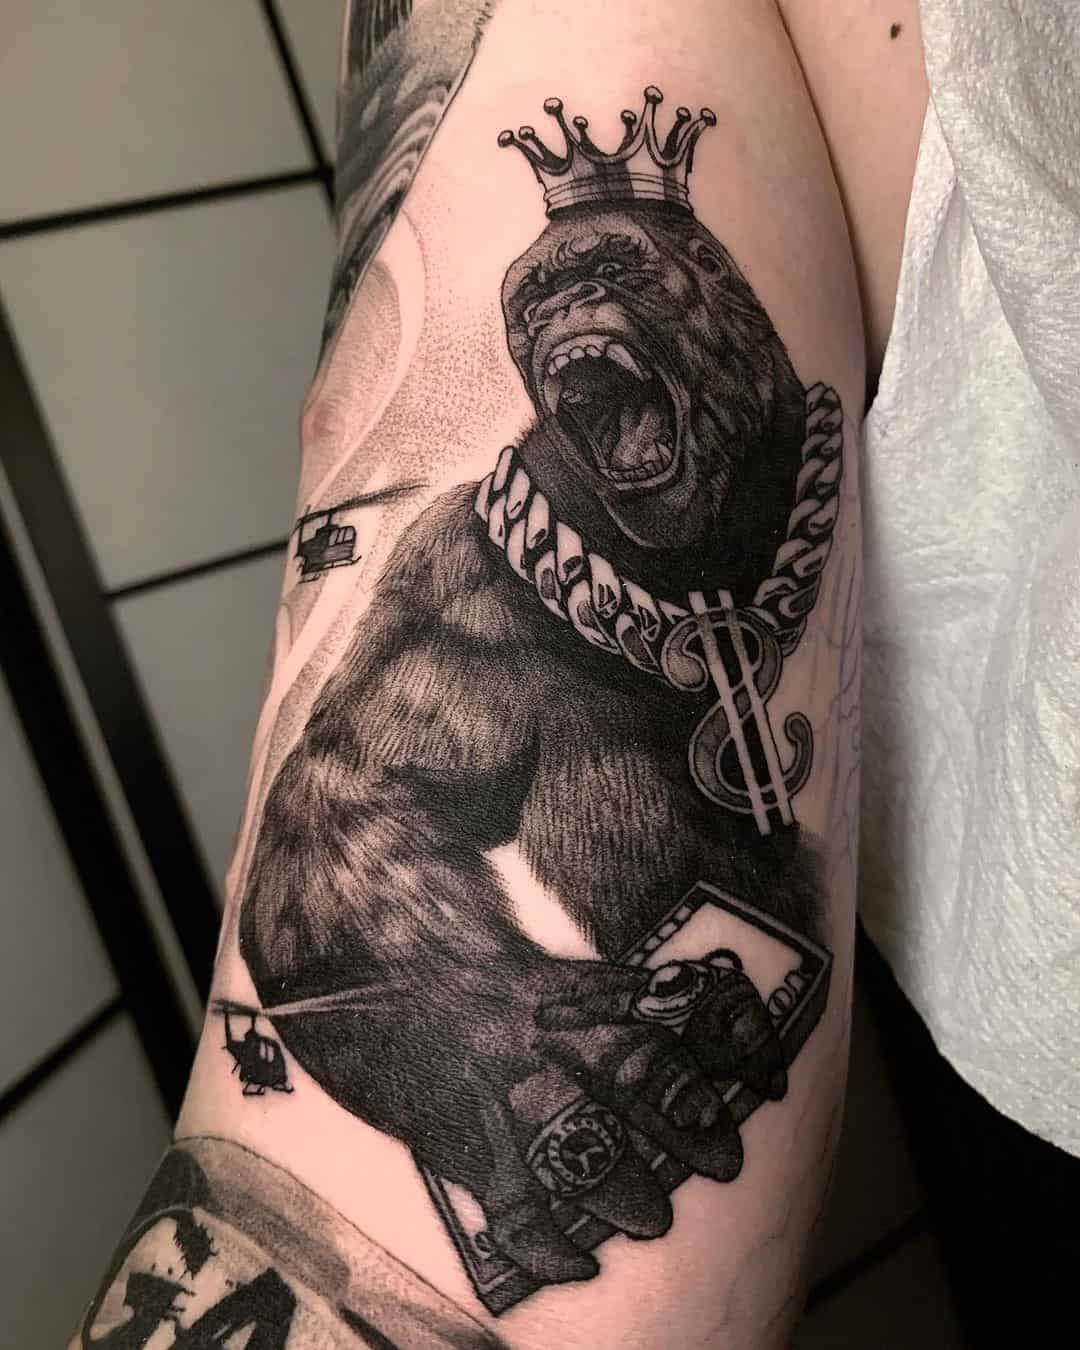 King Kong Tattoo Designs Arm Idea